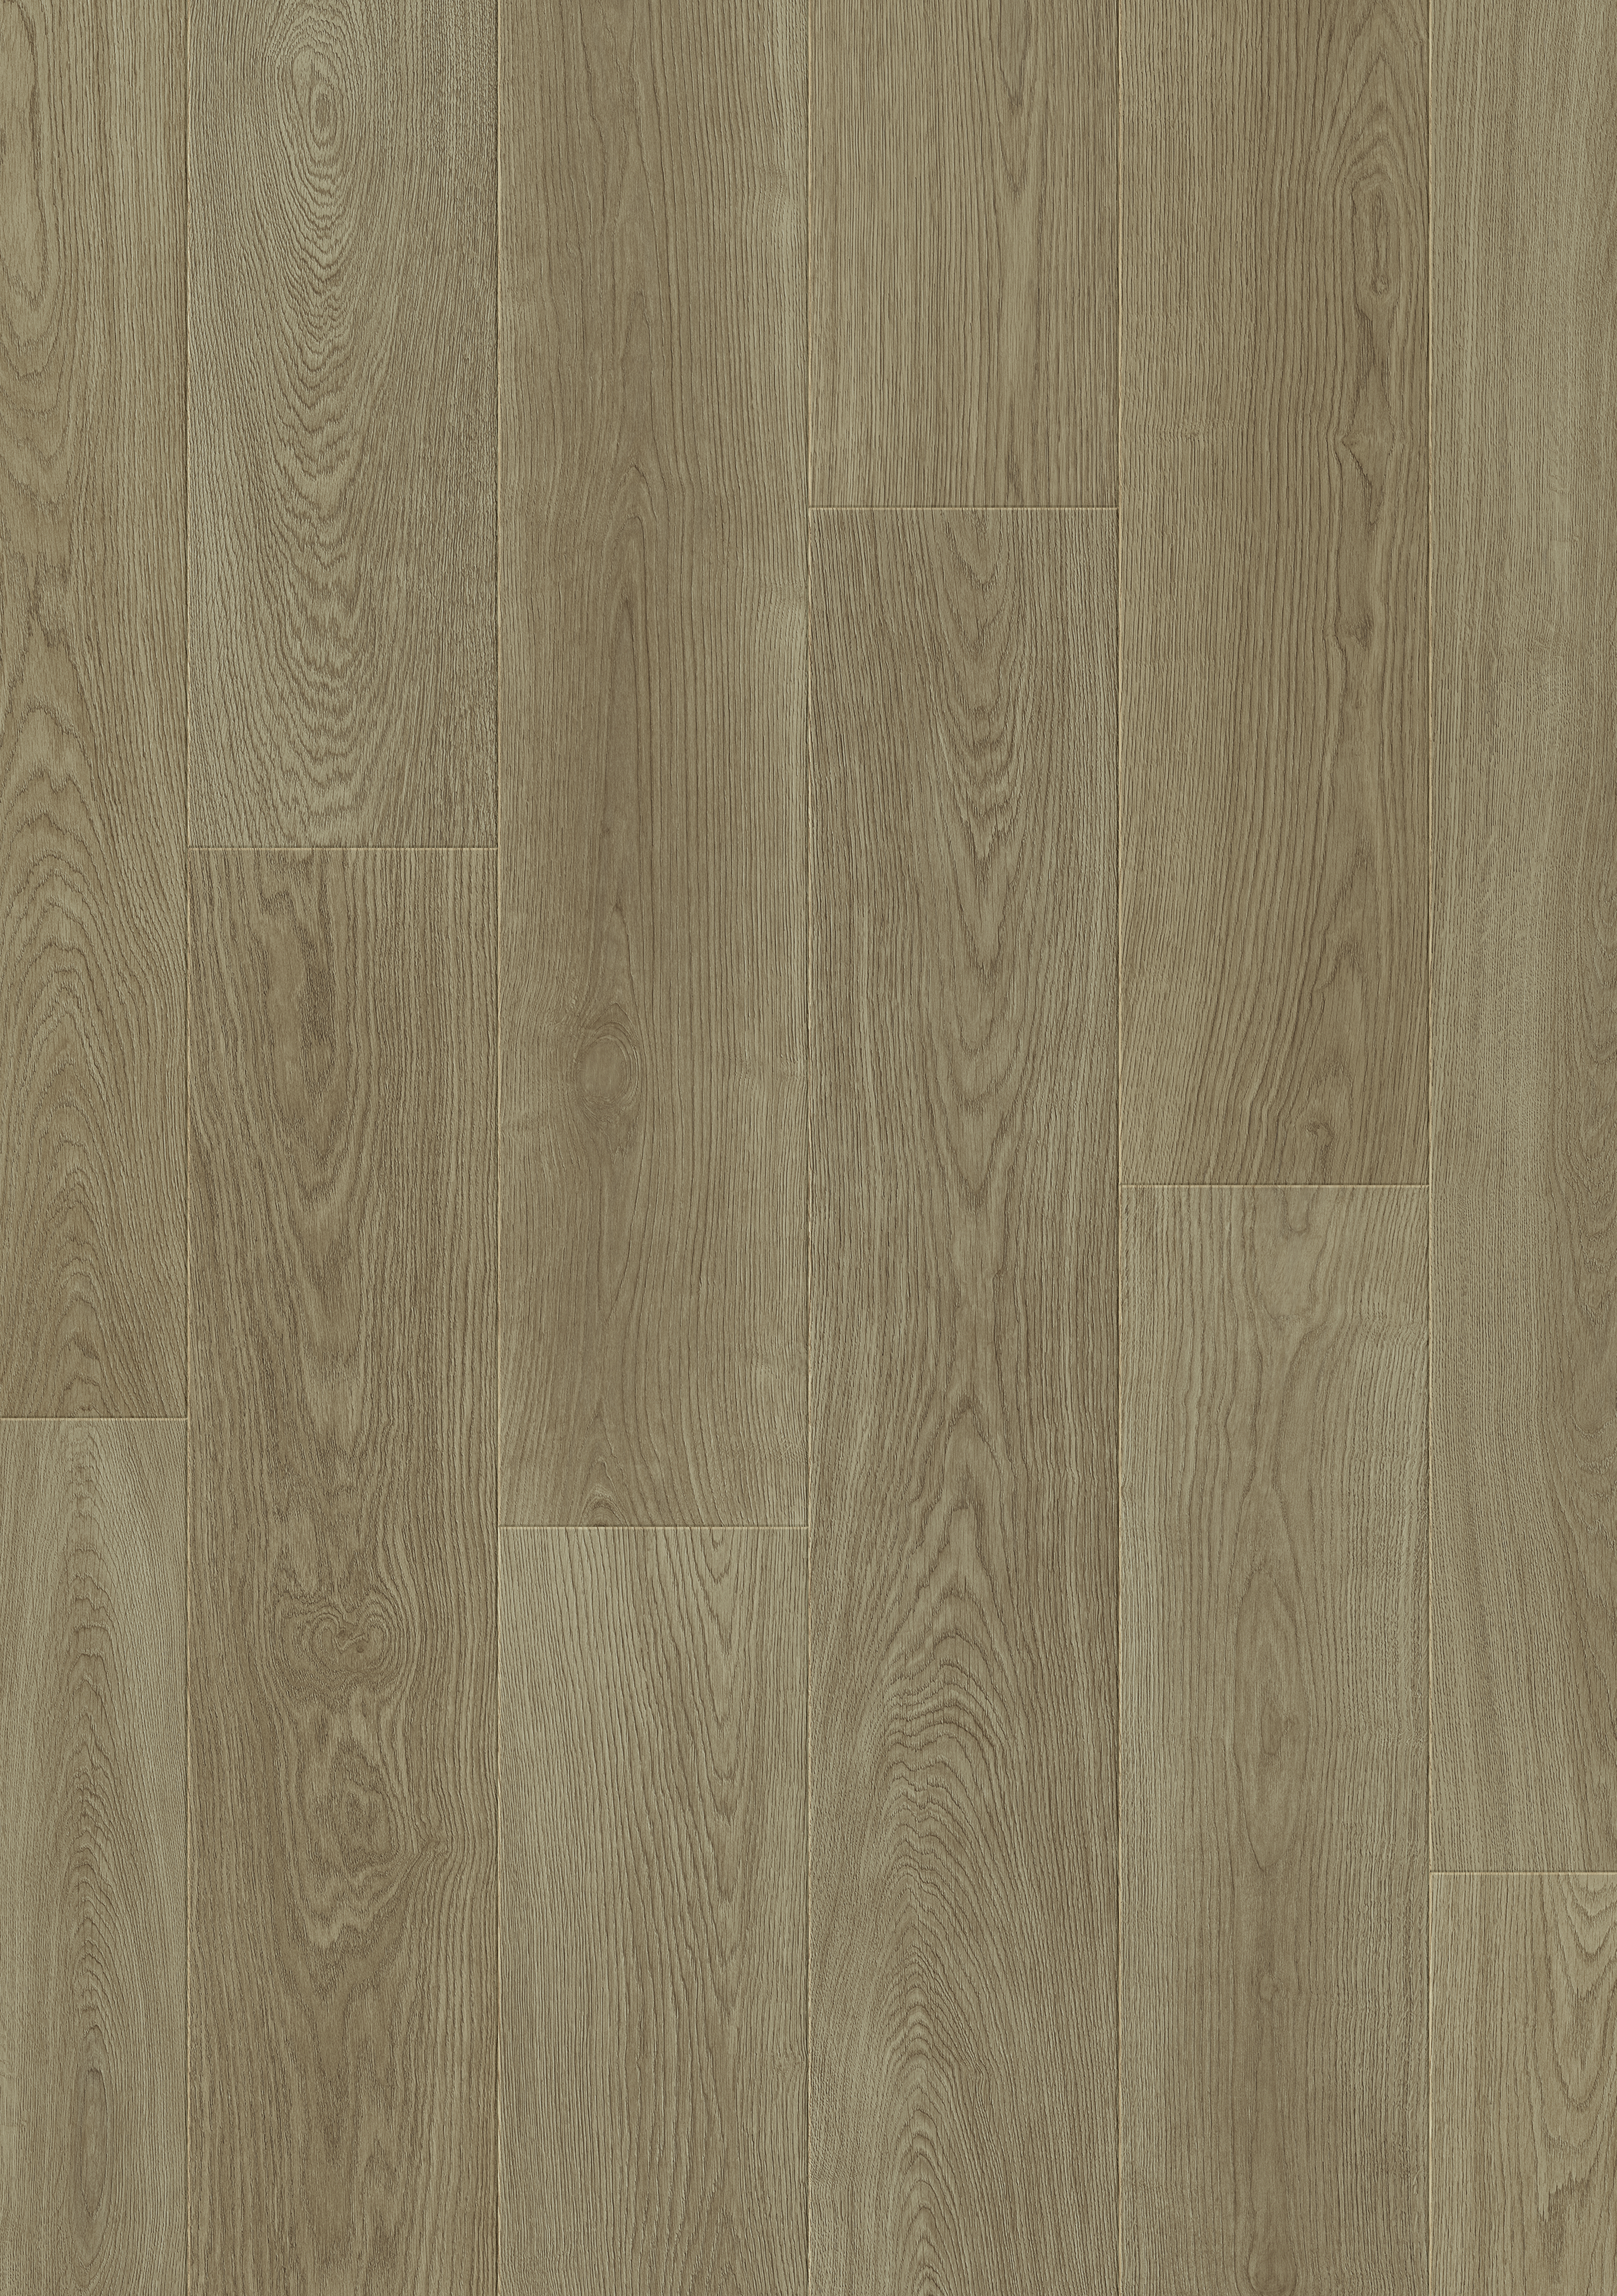 Quick-Step Salto Finn Medium Oak 8mm Laminate Flooring - Sample